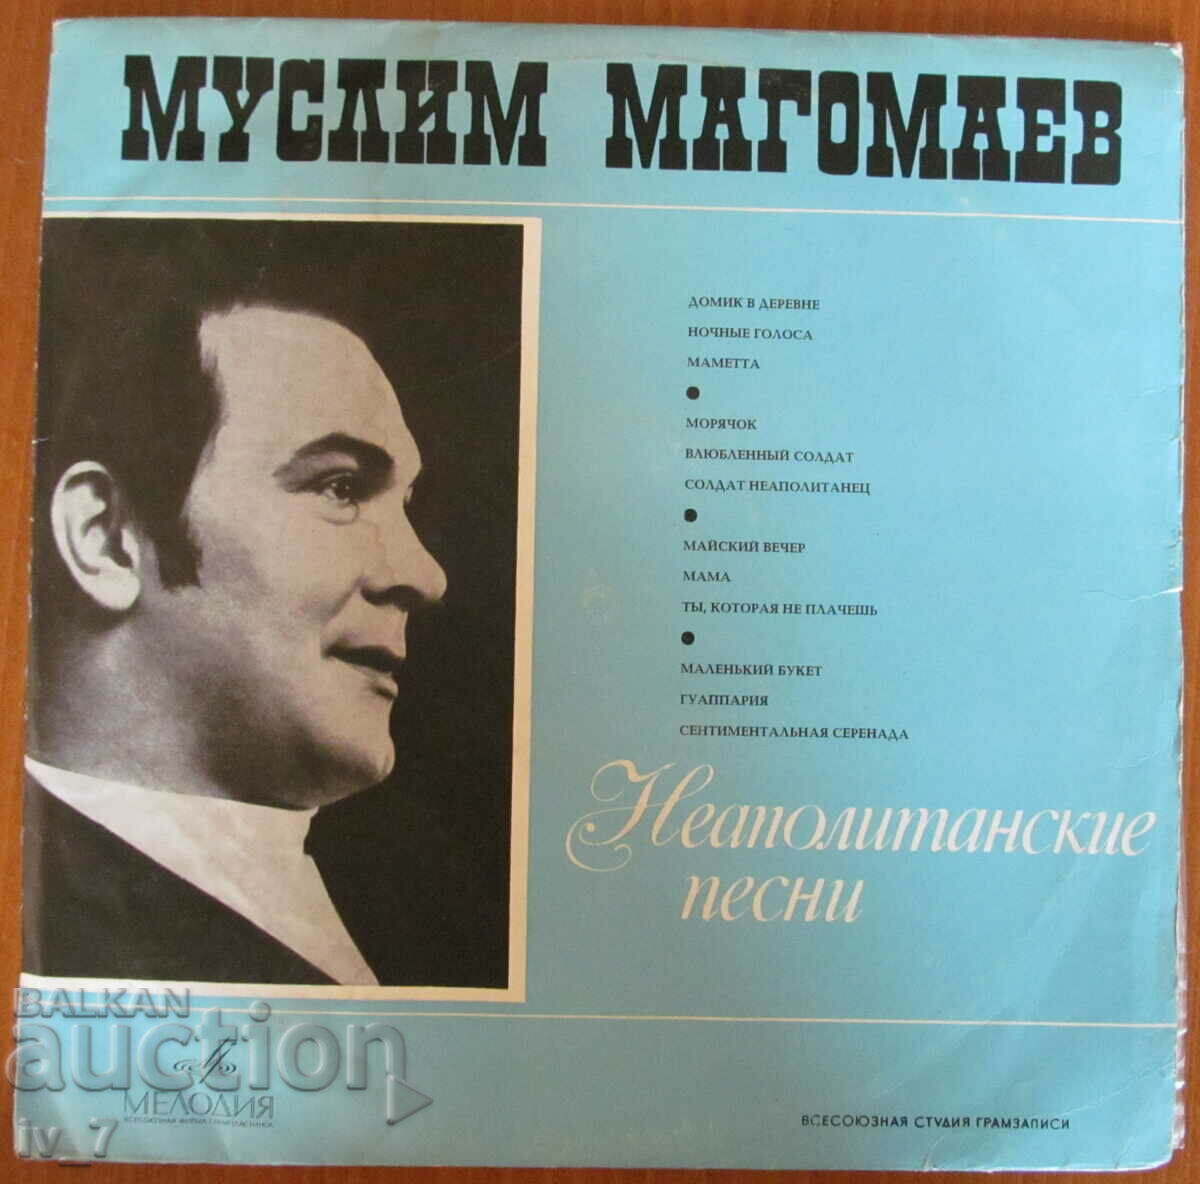 RECORD - MUSLIM MAGOMAEV, μεγάλου σχήματος